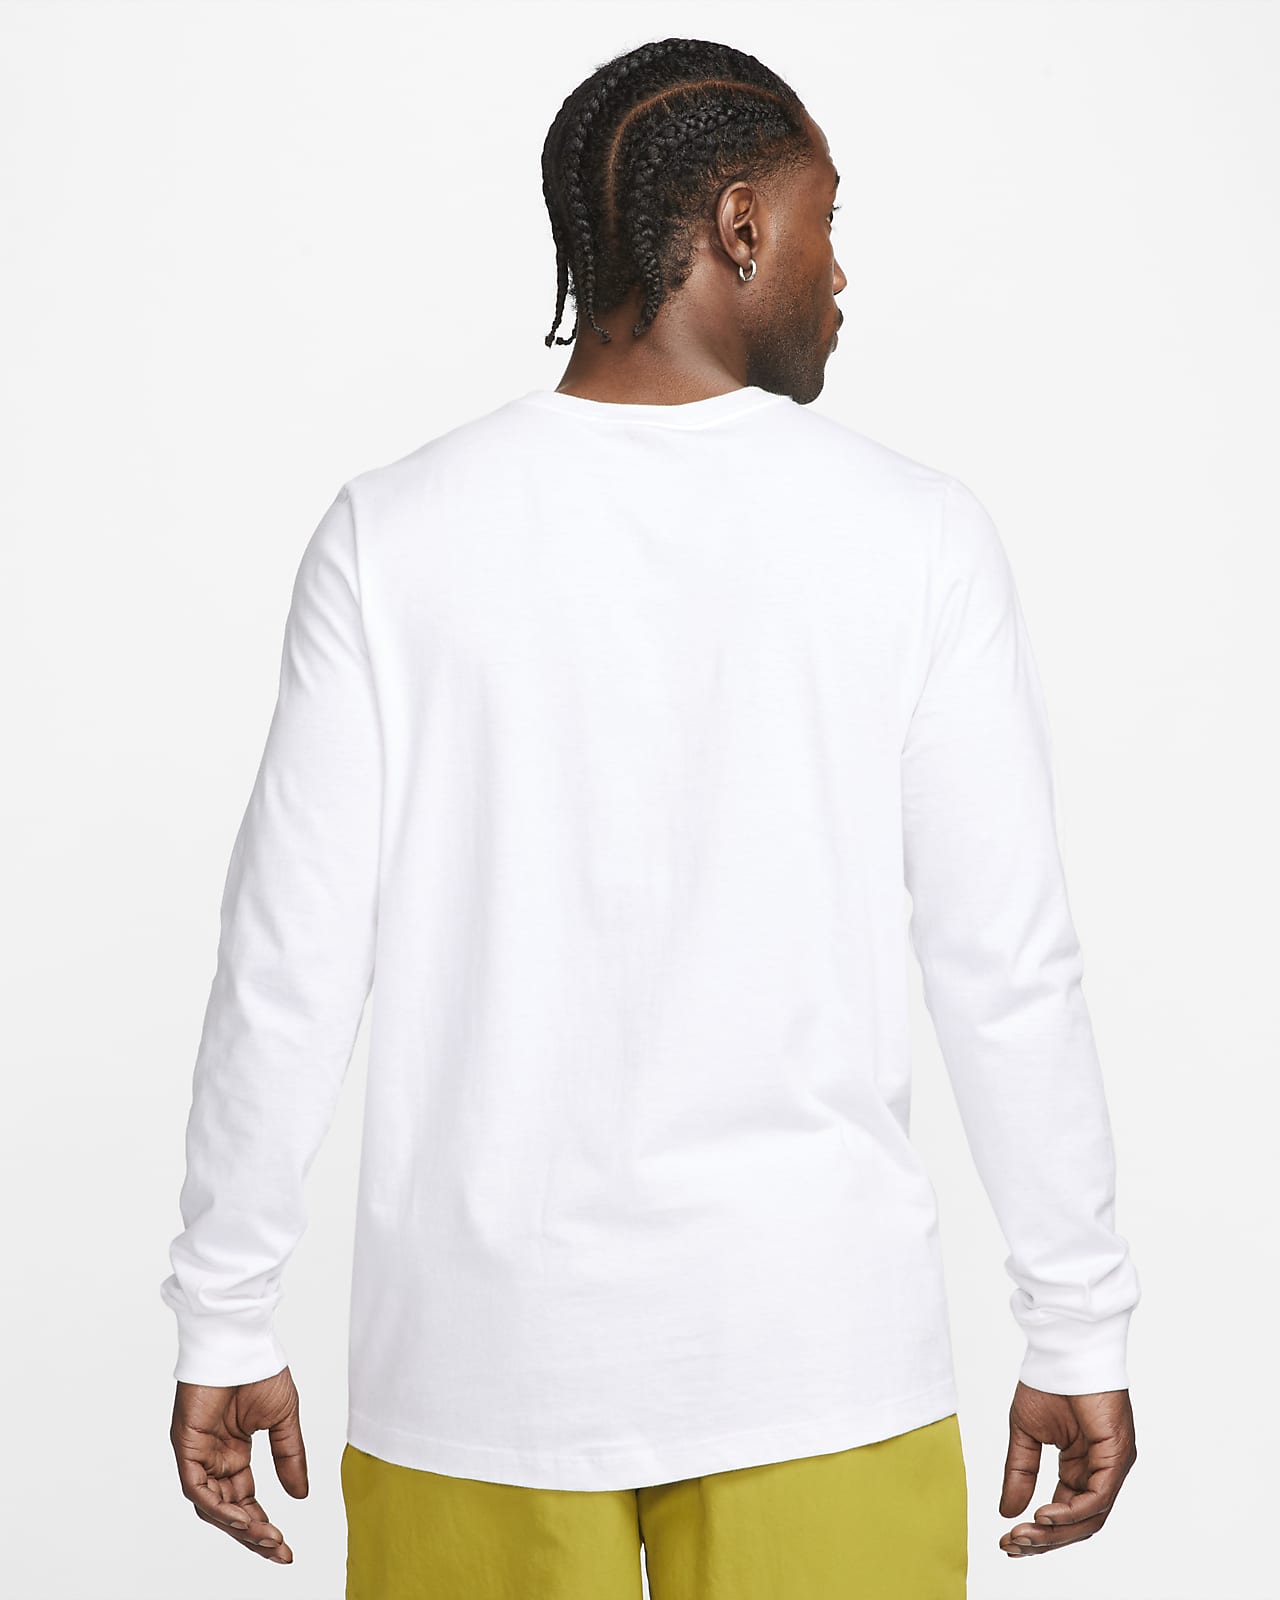 Nike x Future Movement Long-Sleeve T-Shirt.